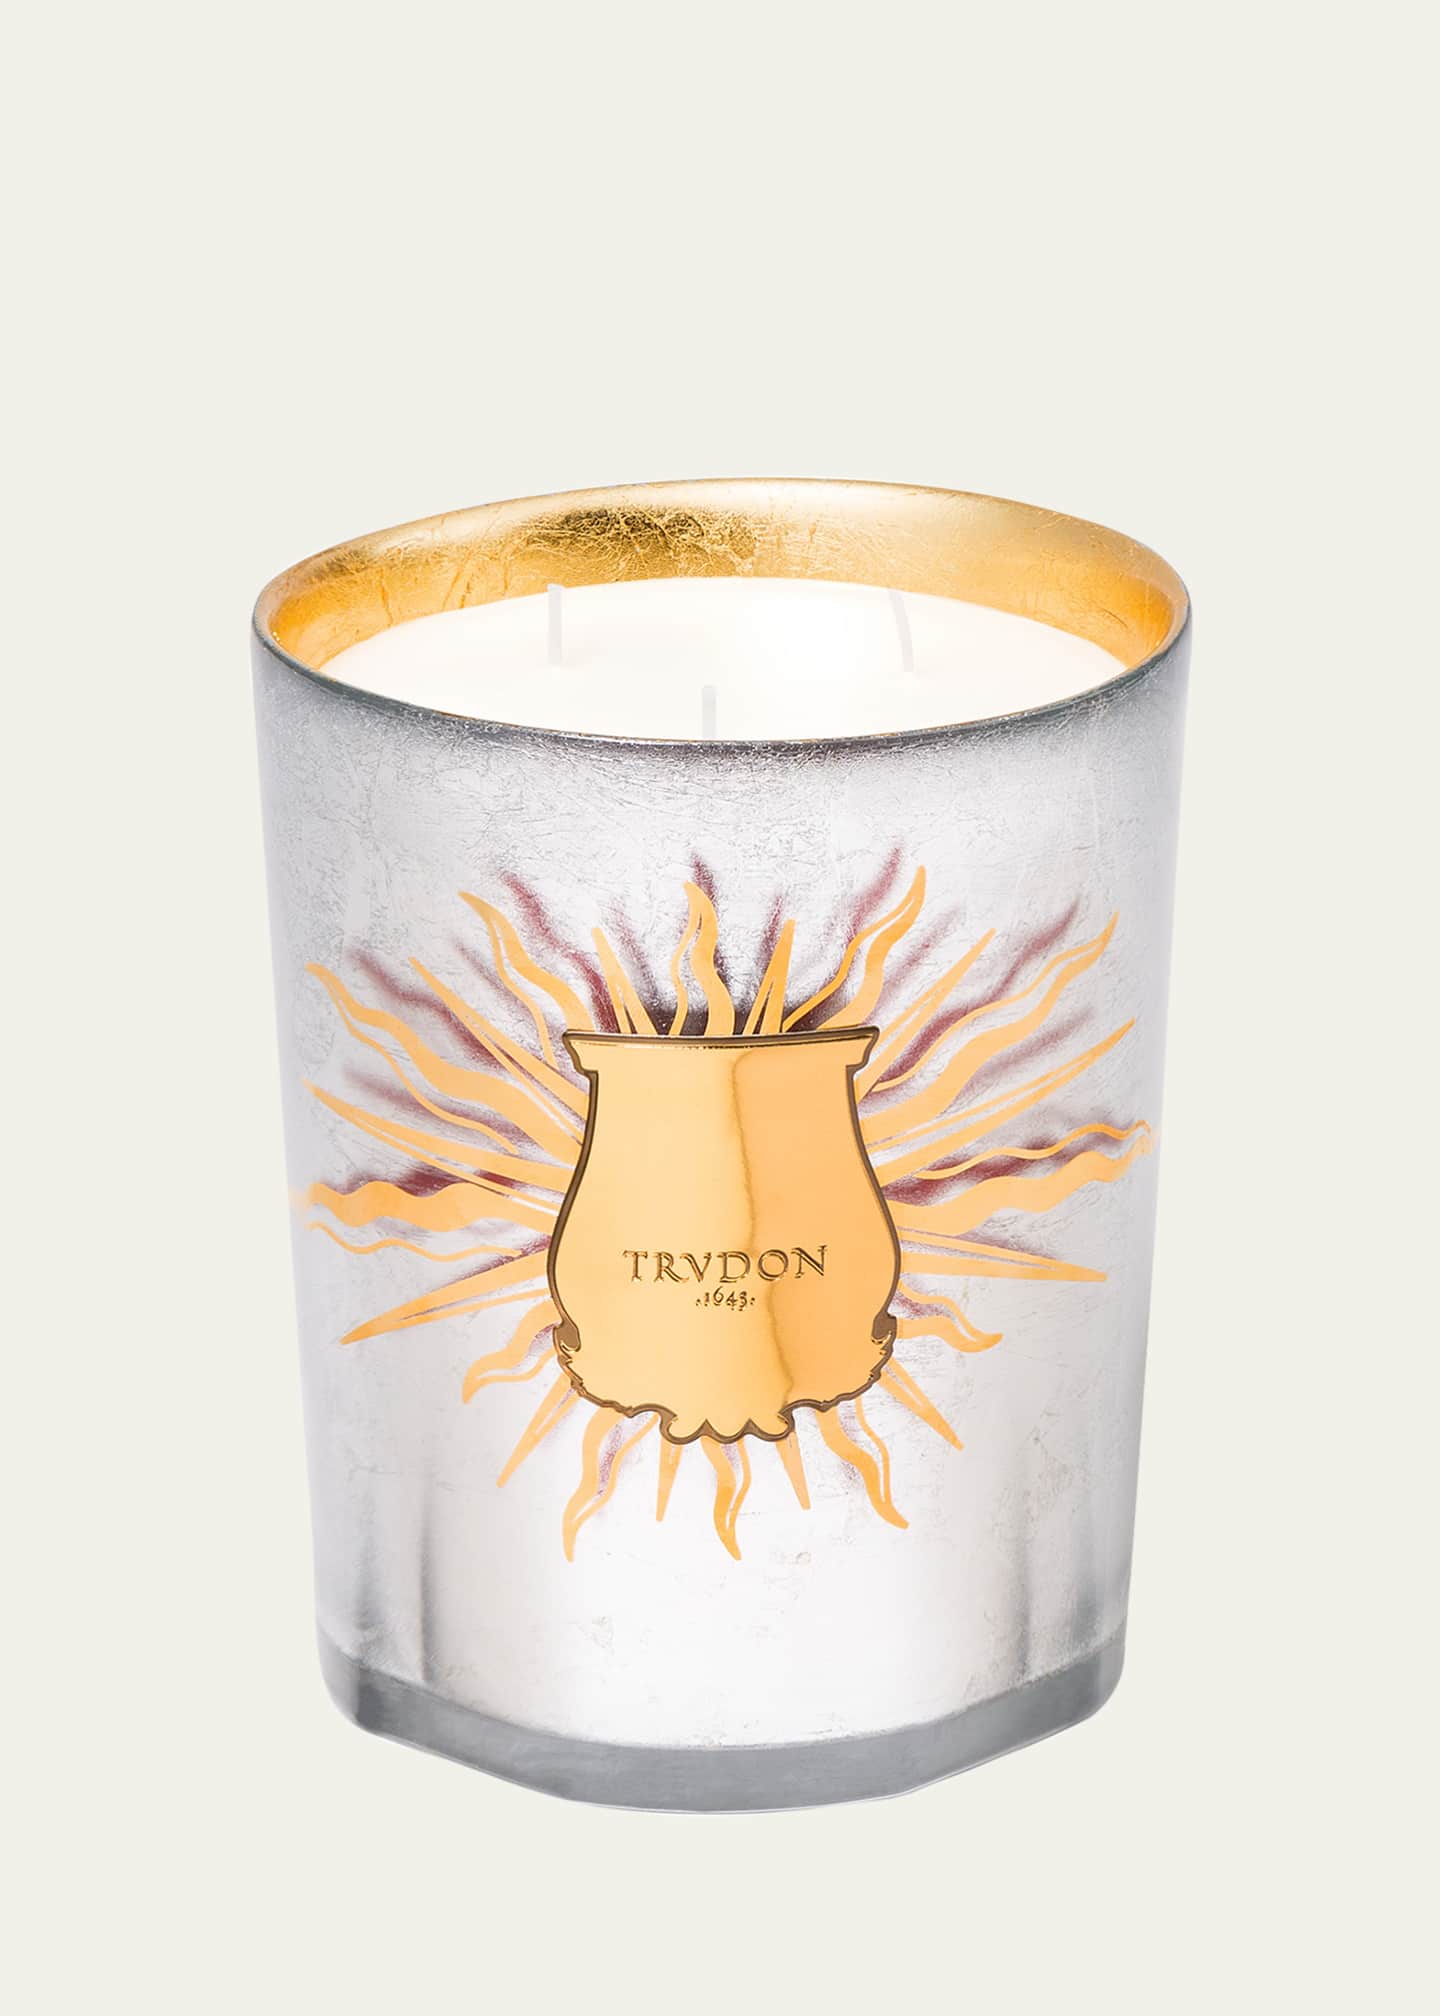 Trudon Altair Intermezzo Candle, 800 g - Bergdorf Goodman